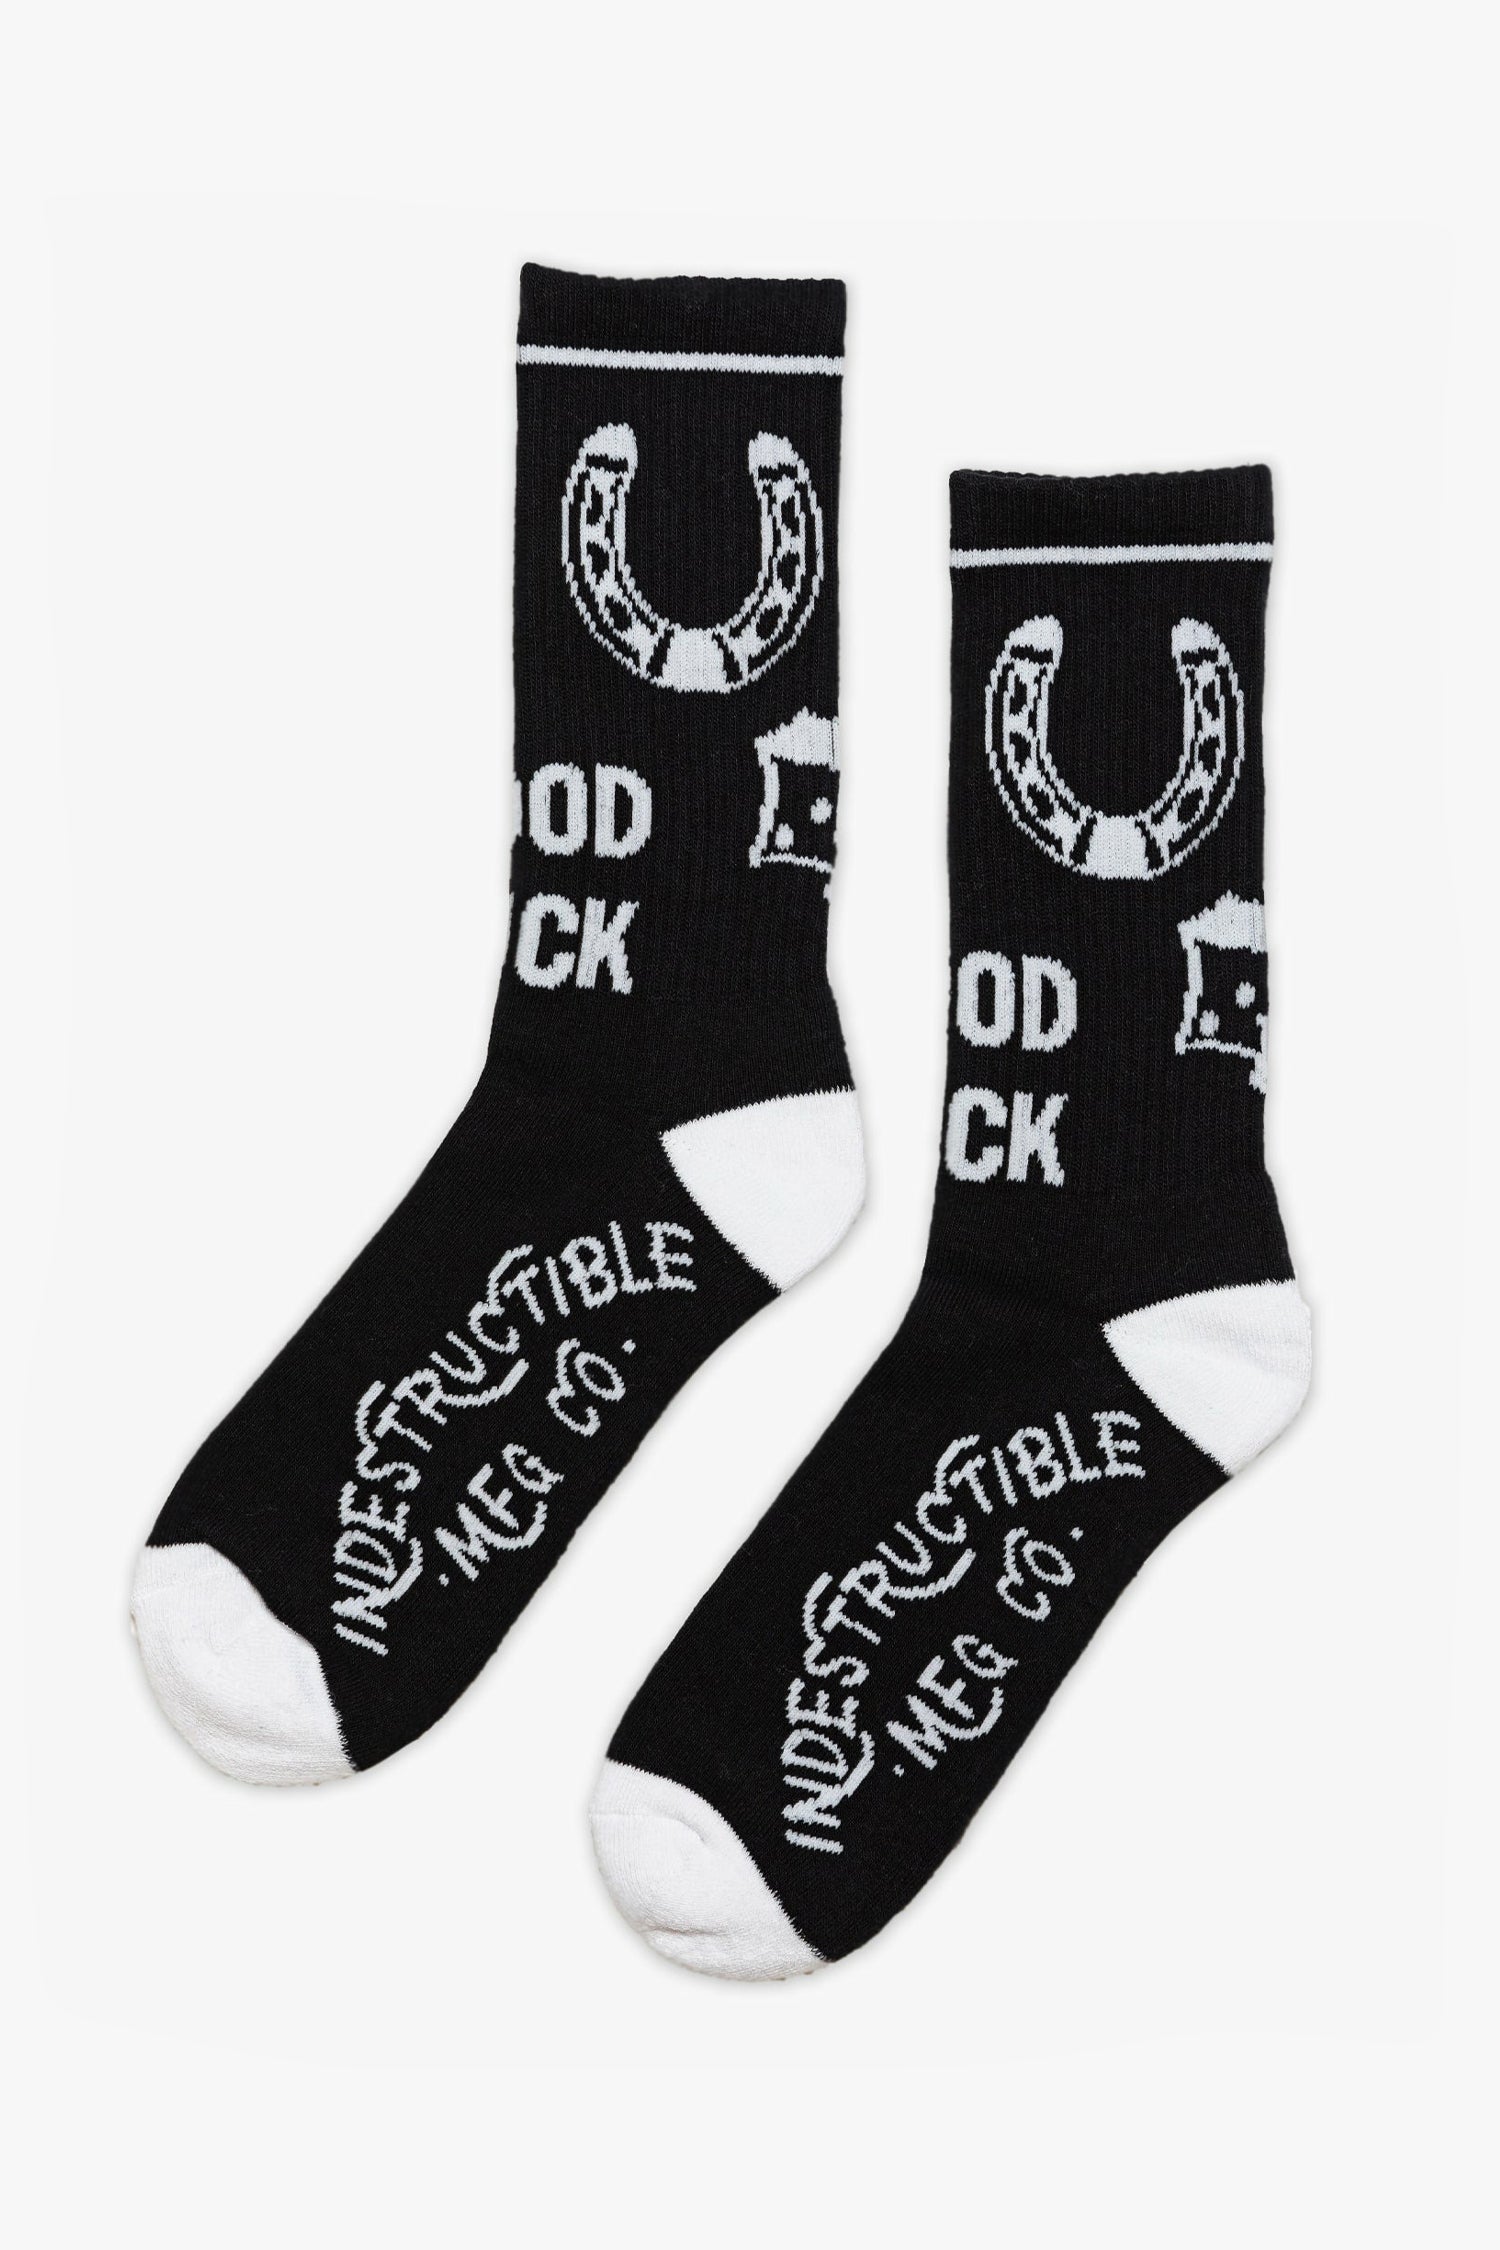 Good Luck Socks - Indestructible MFG